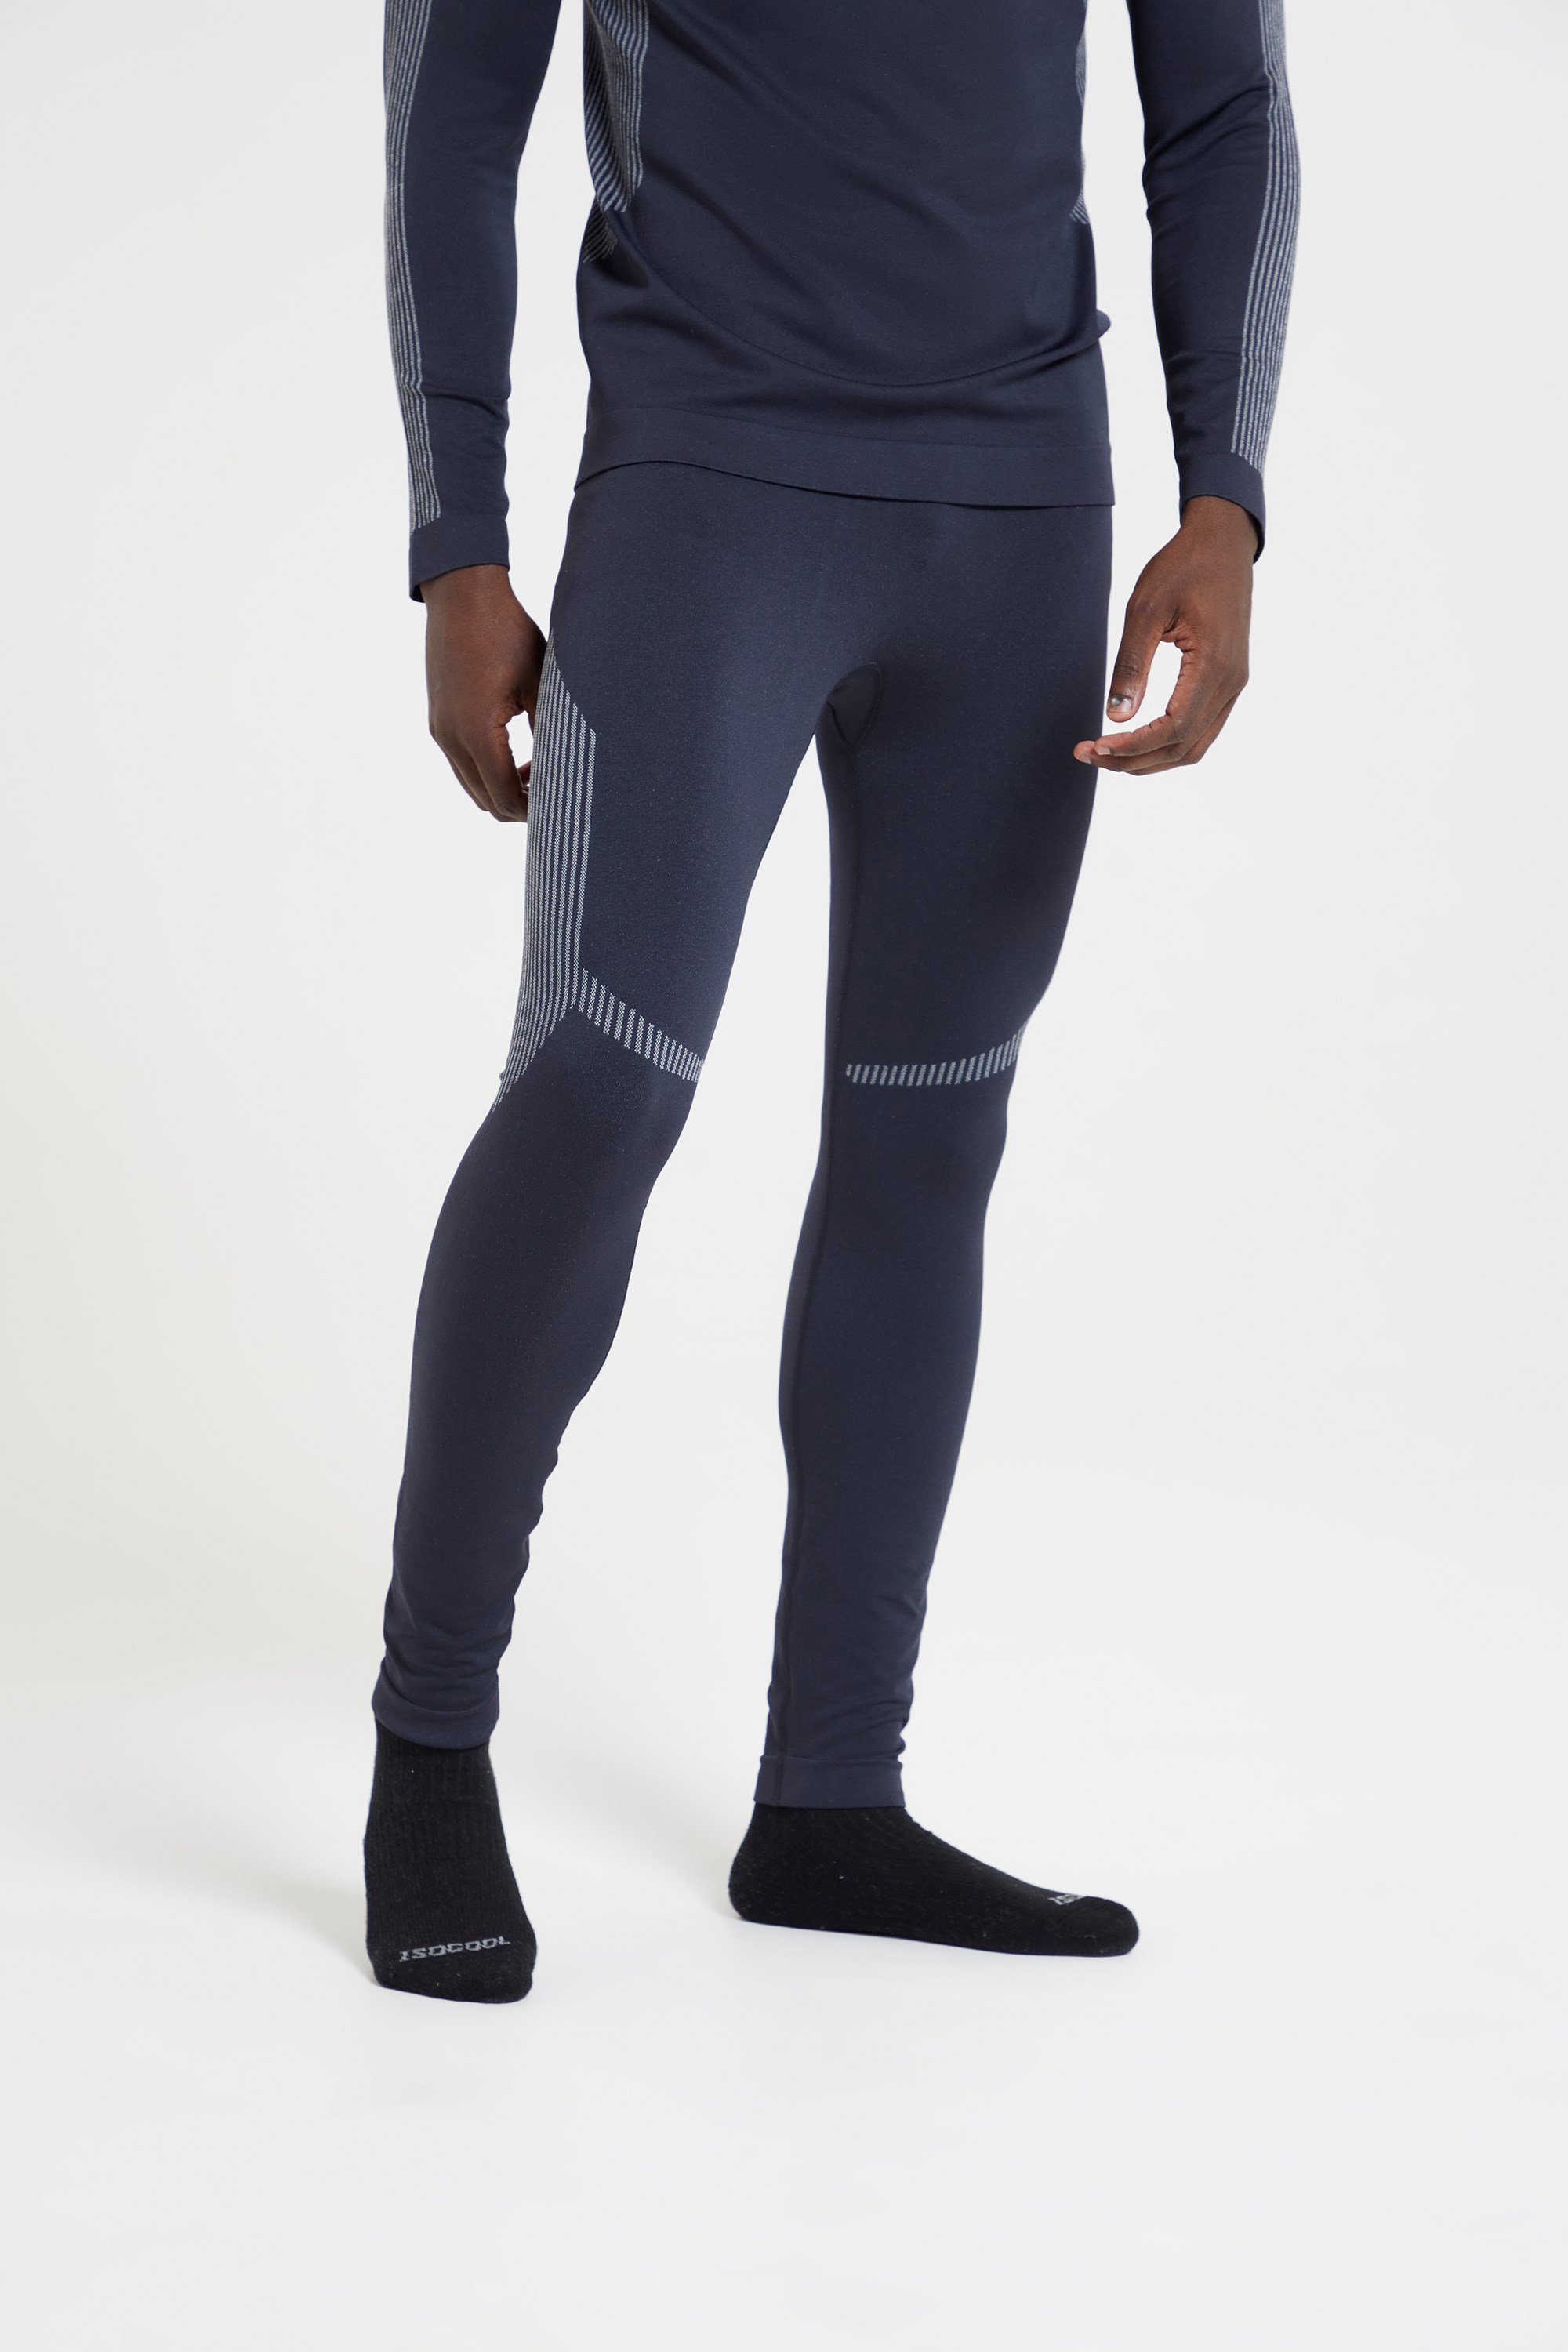 Bulk-buy Body Glove Men′s Thermal Underwear Base Layer Top & Long